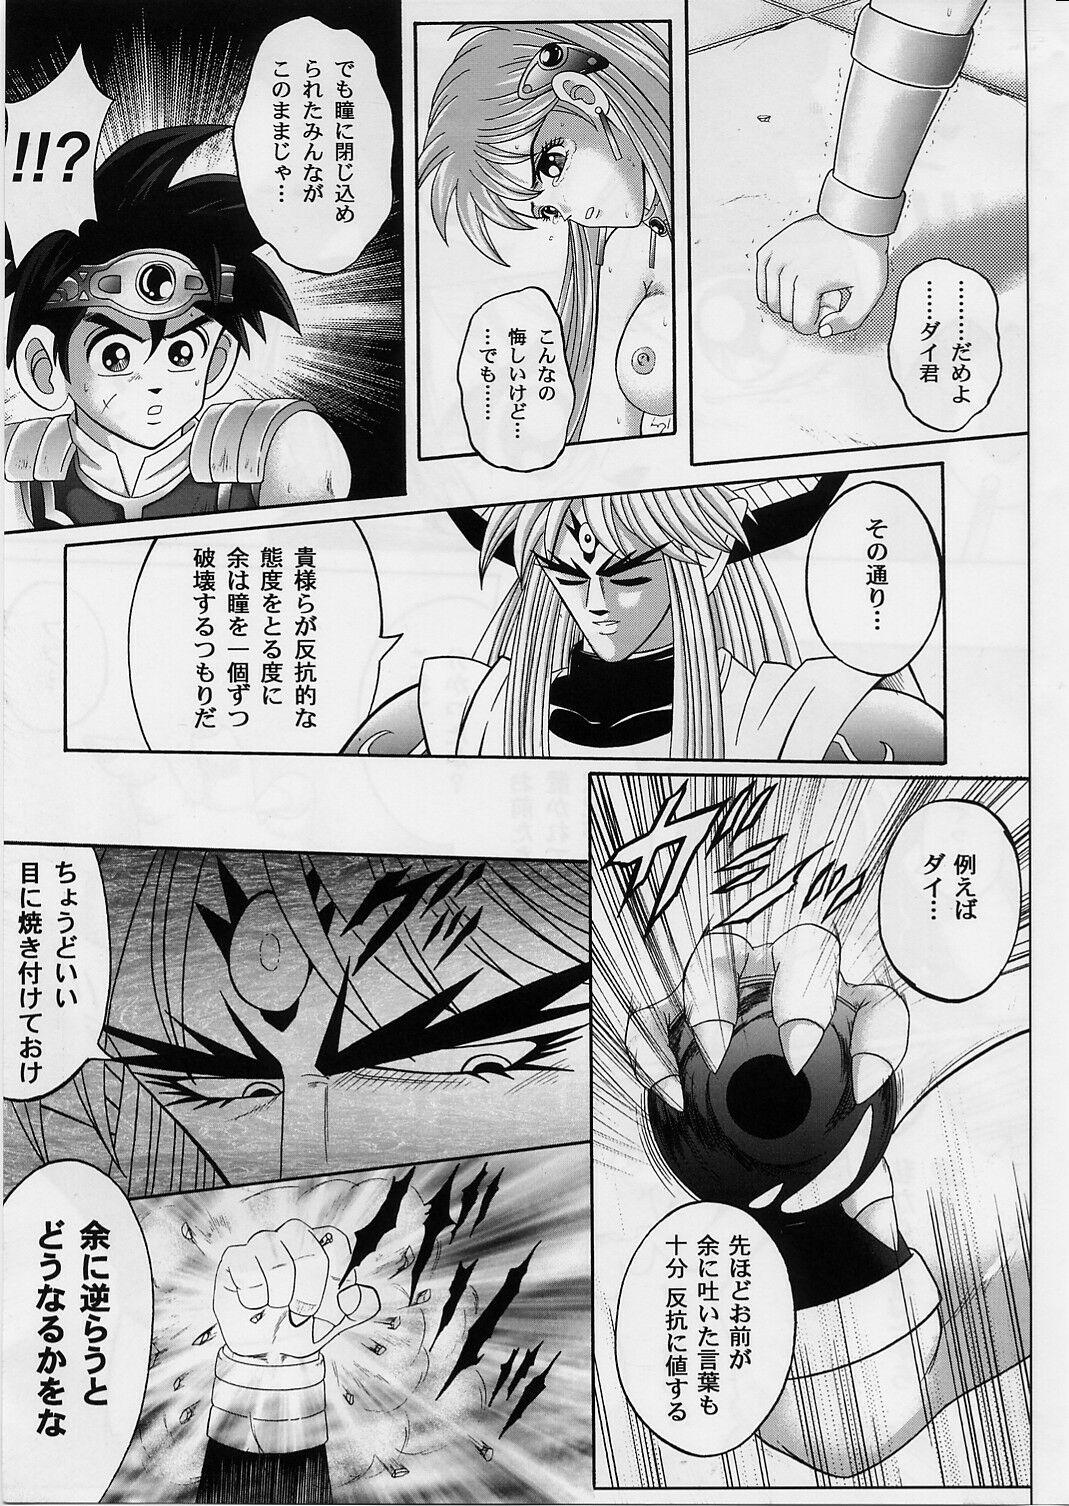 Ejaculation DIME ALLIANCE 2 - Dragon quest dai no daibouken Anime - Page 8